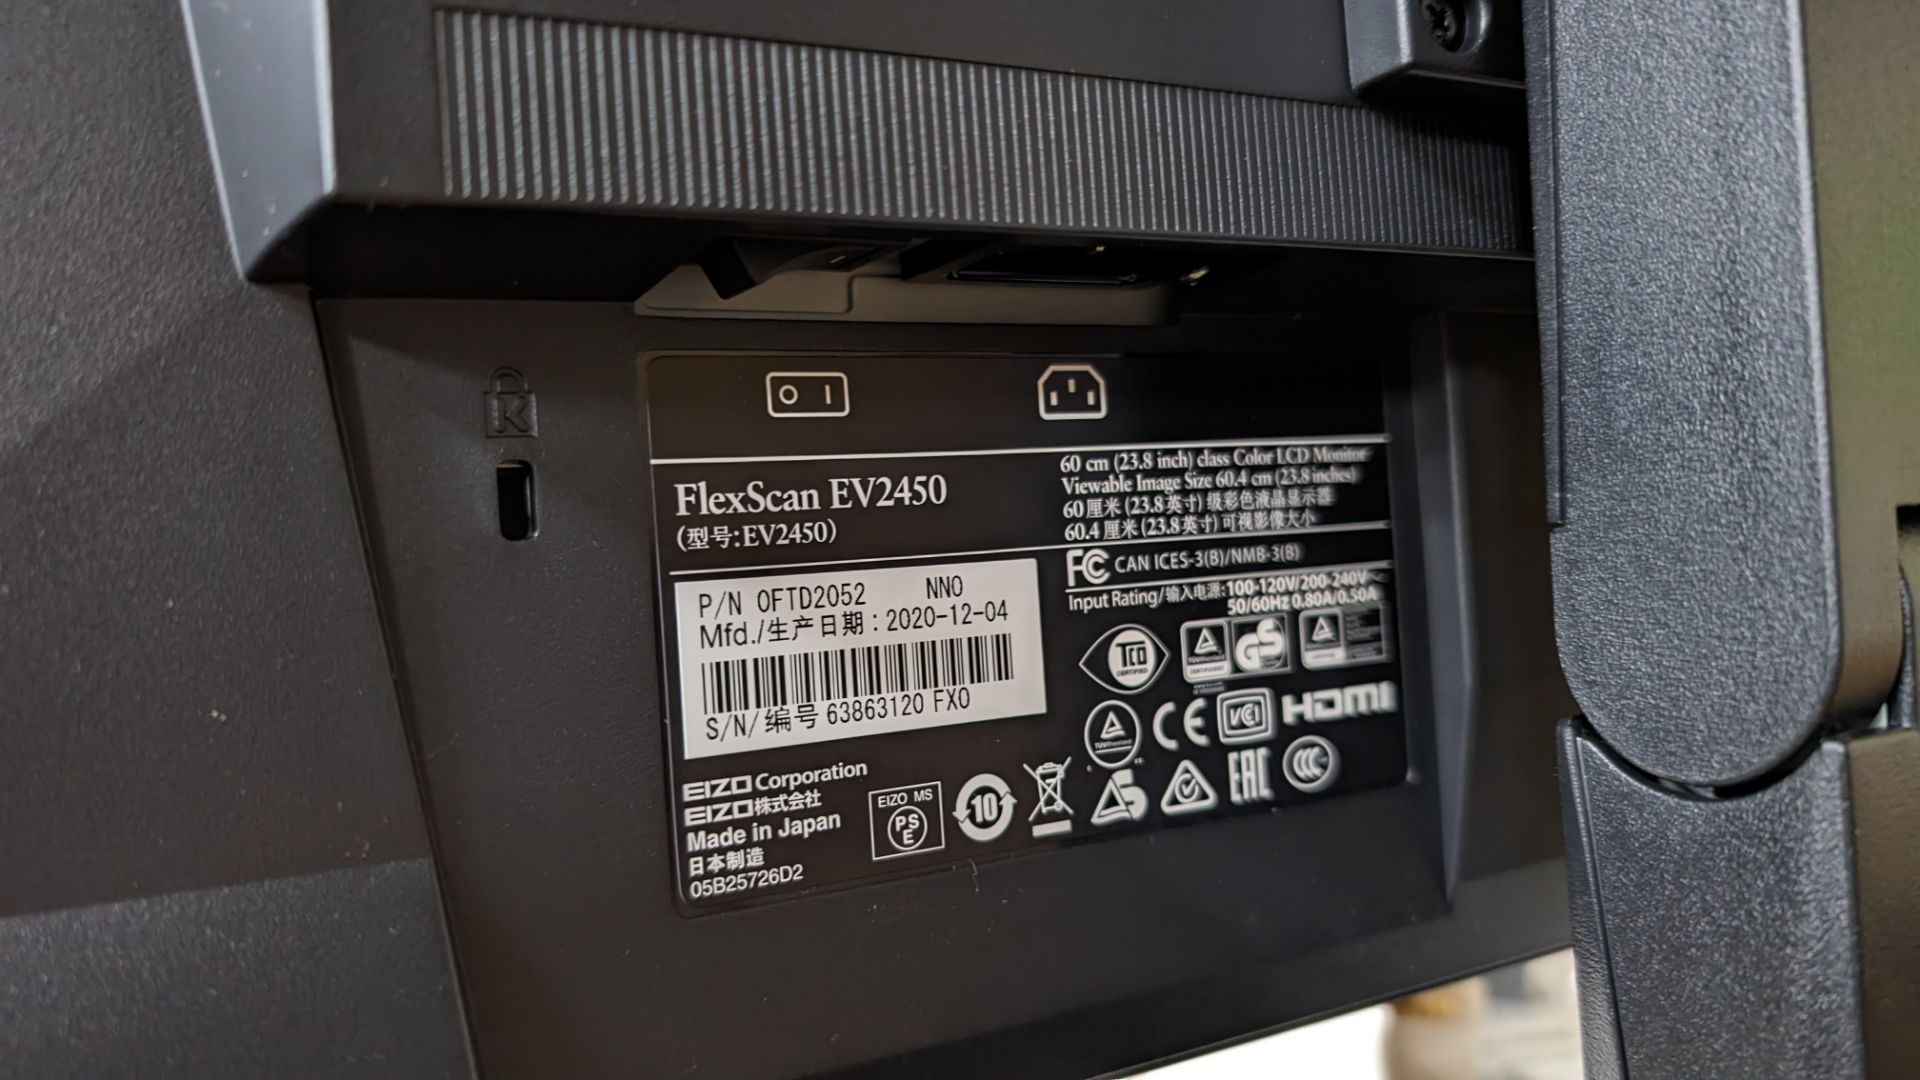 Eizo Flexscan model EV2450 23.8" widescreen colour LCD monitor - Image 8 of 8